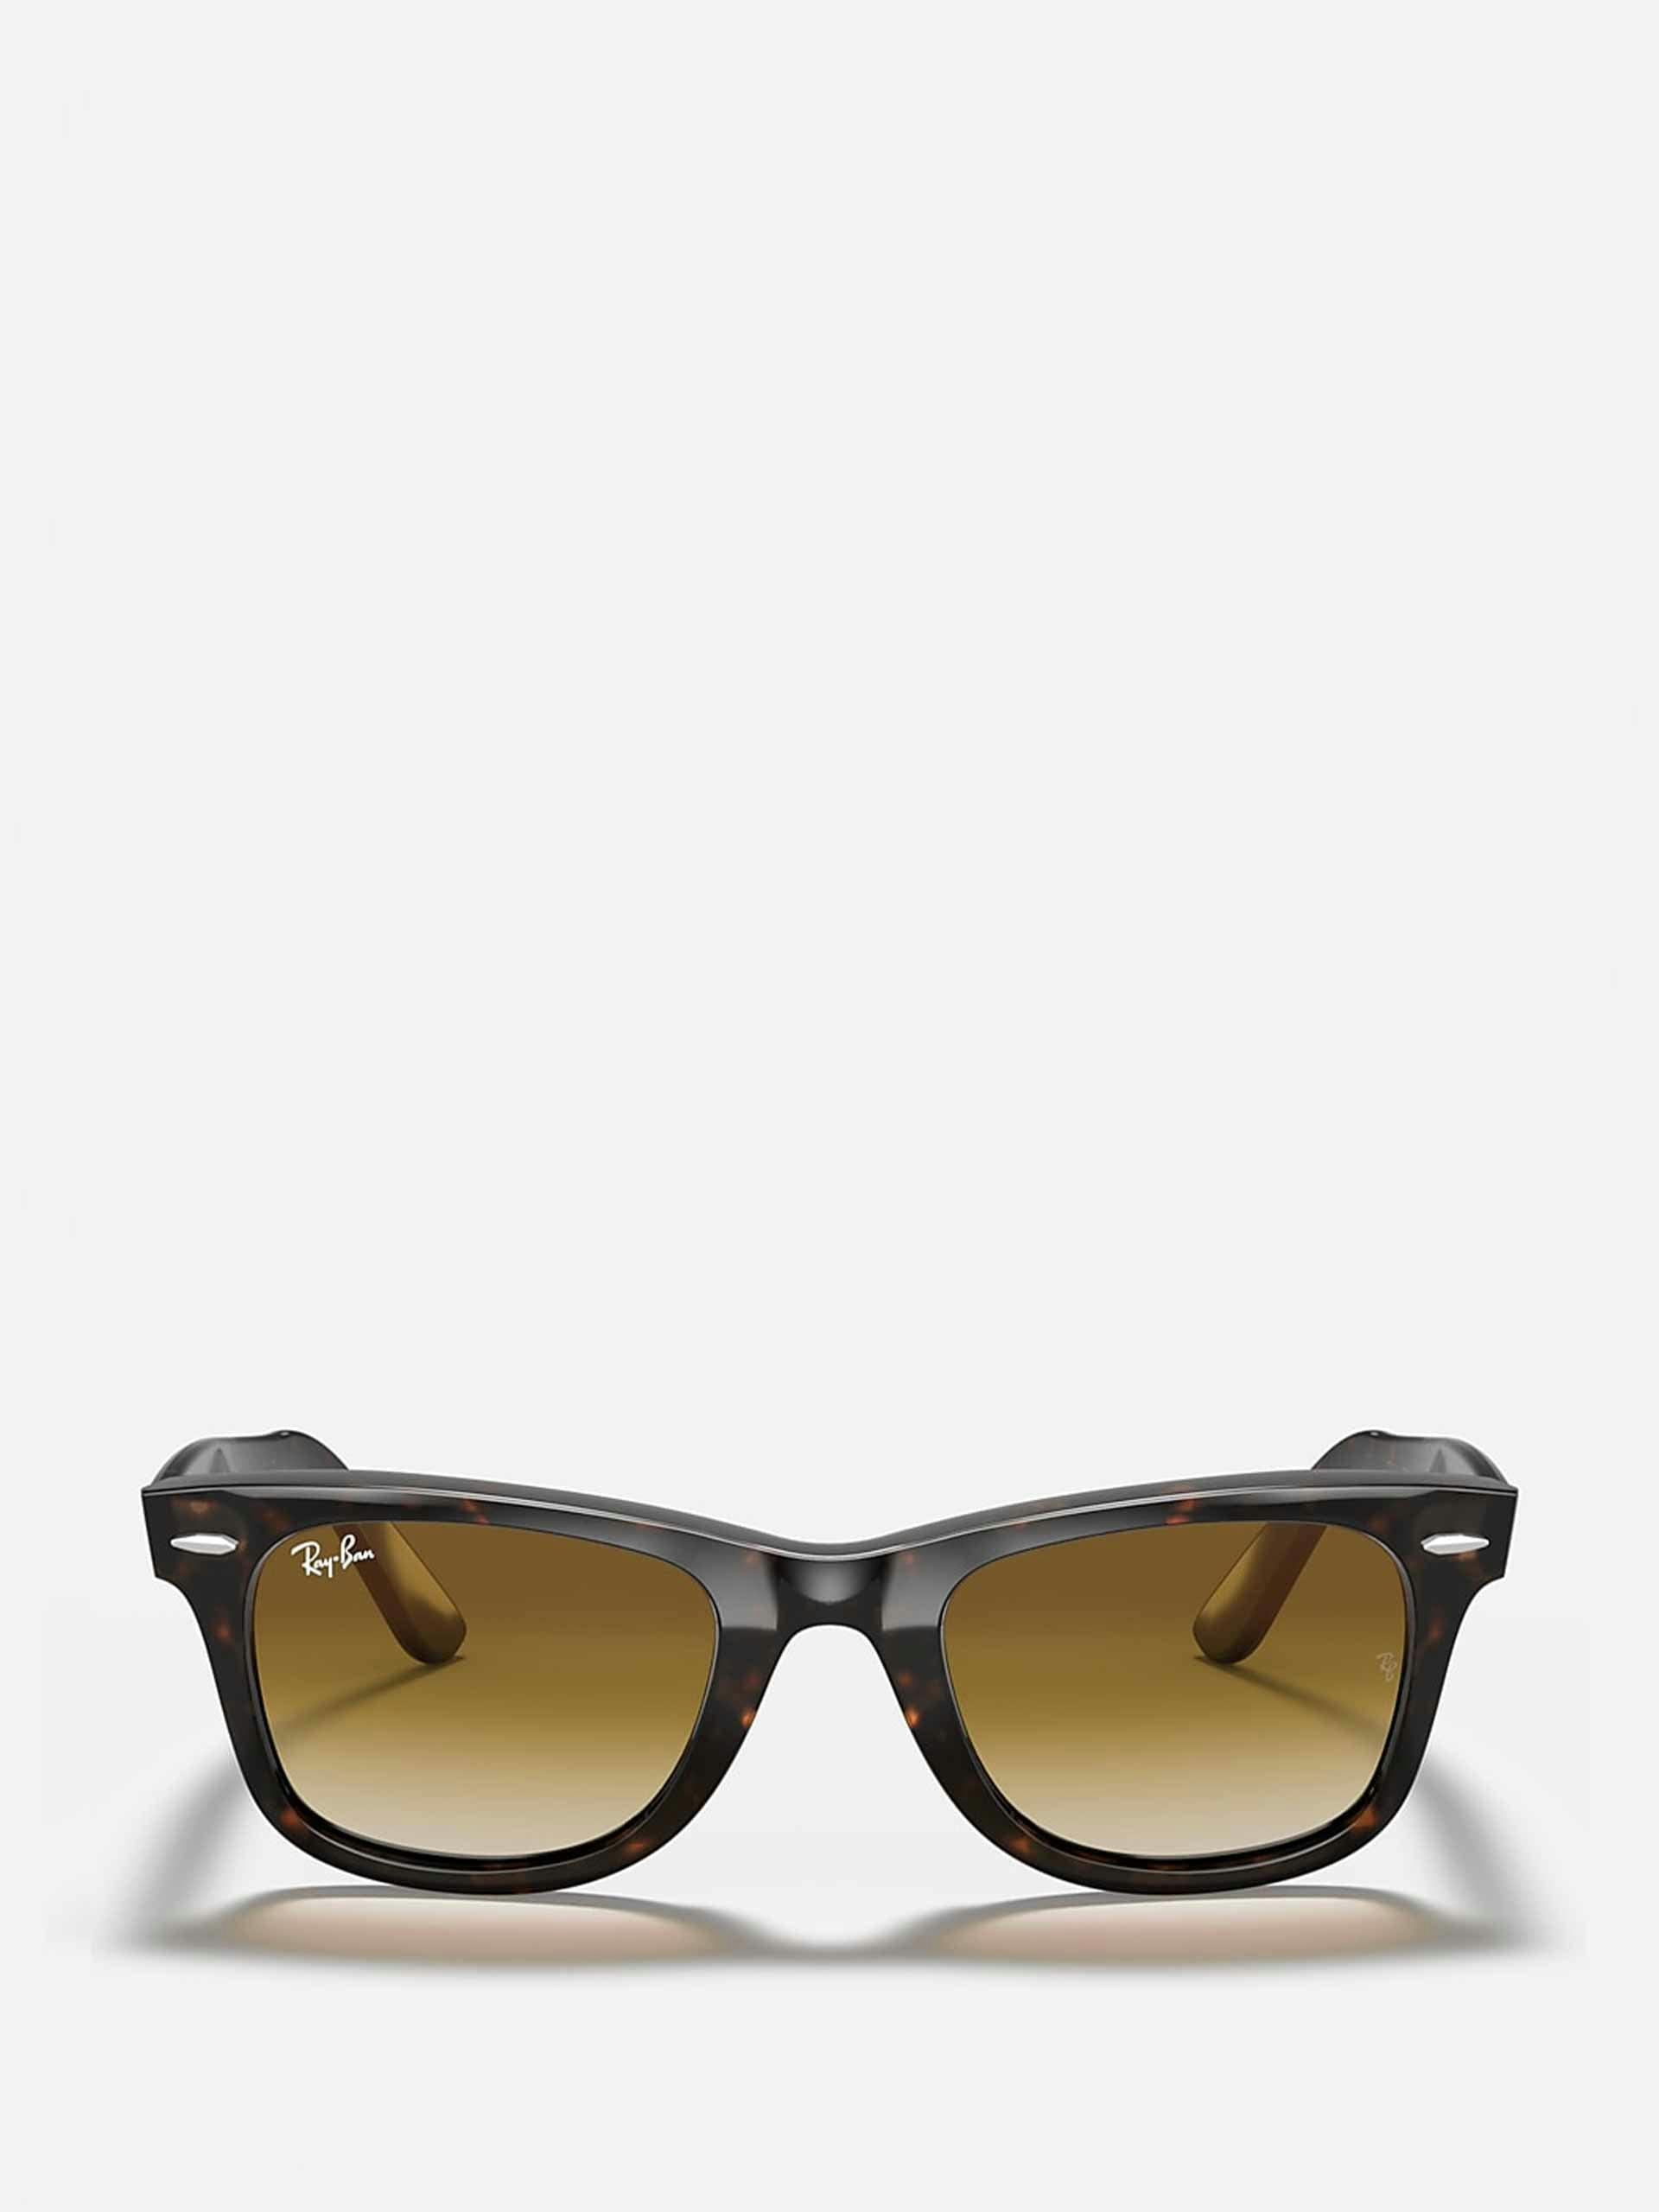 Classic tortoiseshell Wayfarer sunglasses